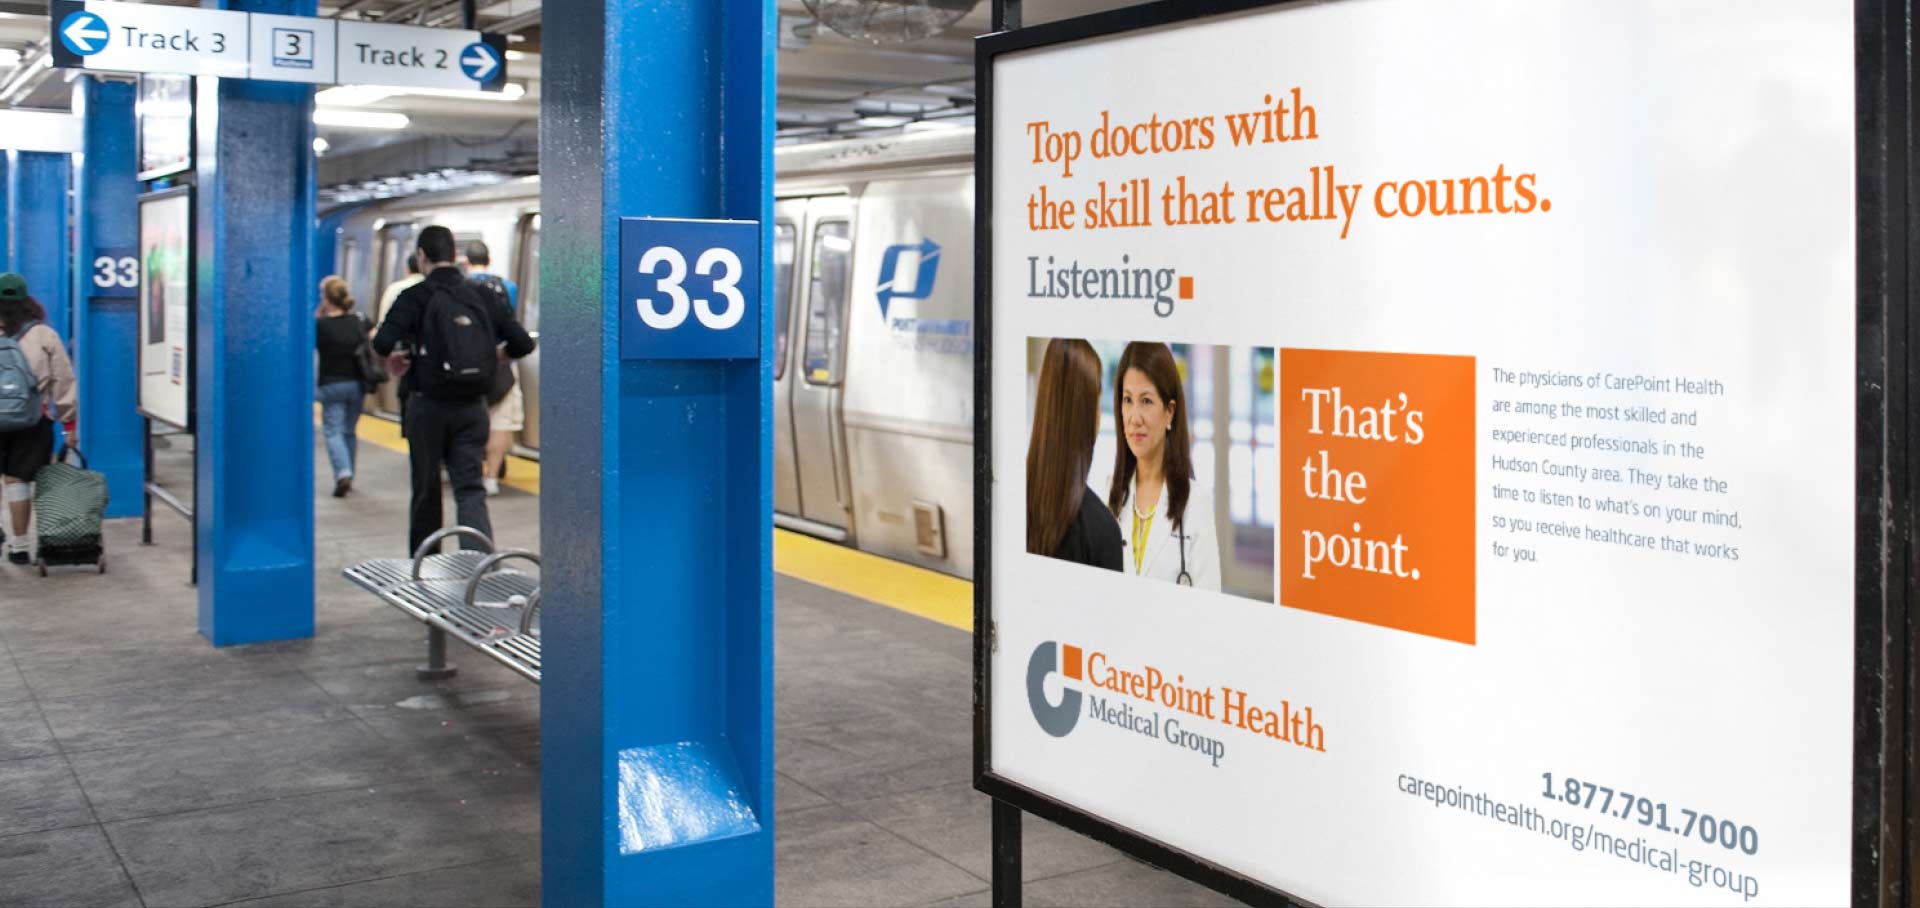 Carepoint Health Subway advertisement